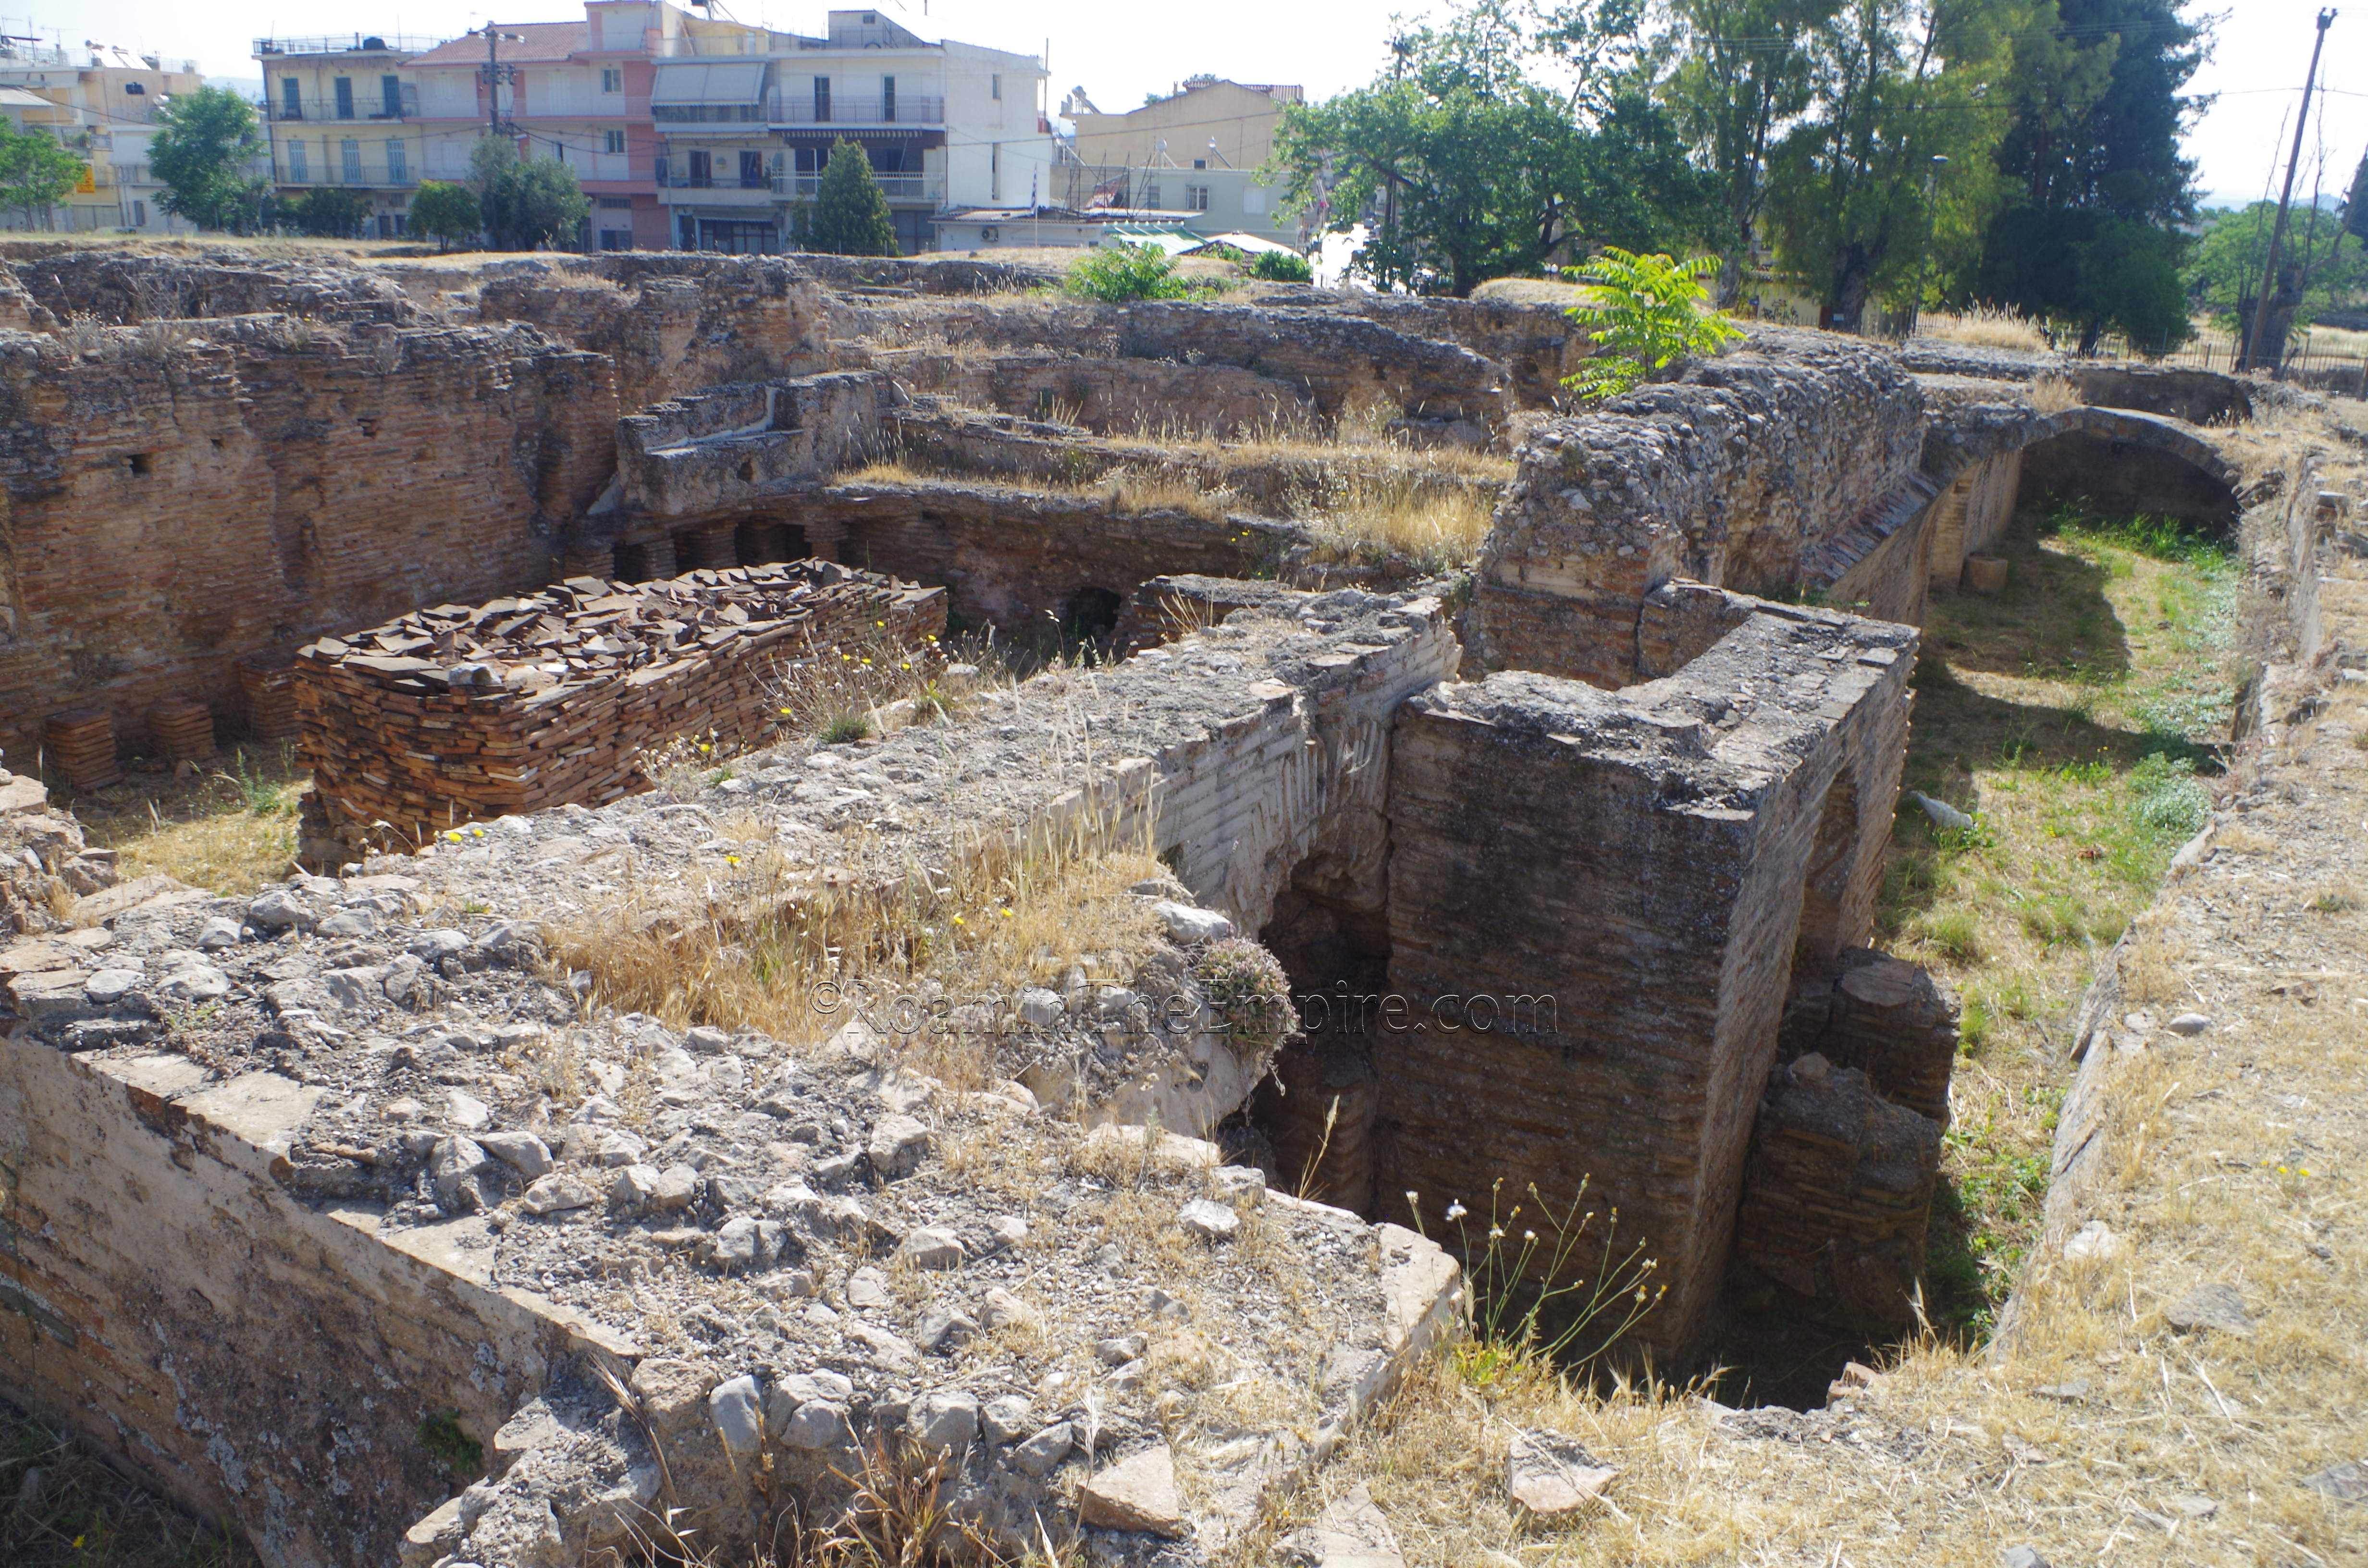 Southern caldarium and cryptoporticus of the baths. Argos.